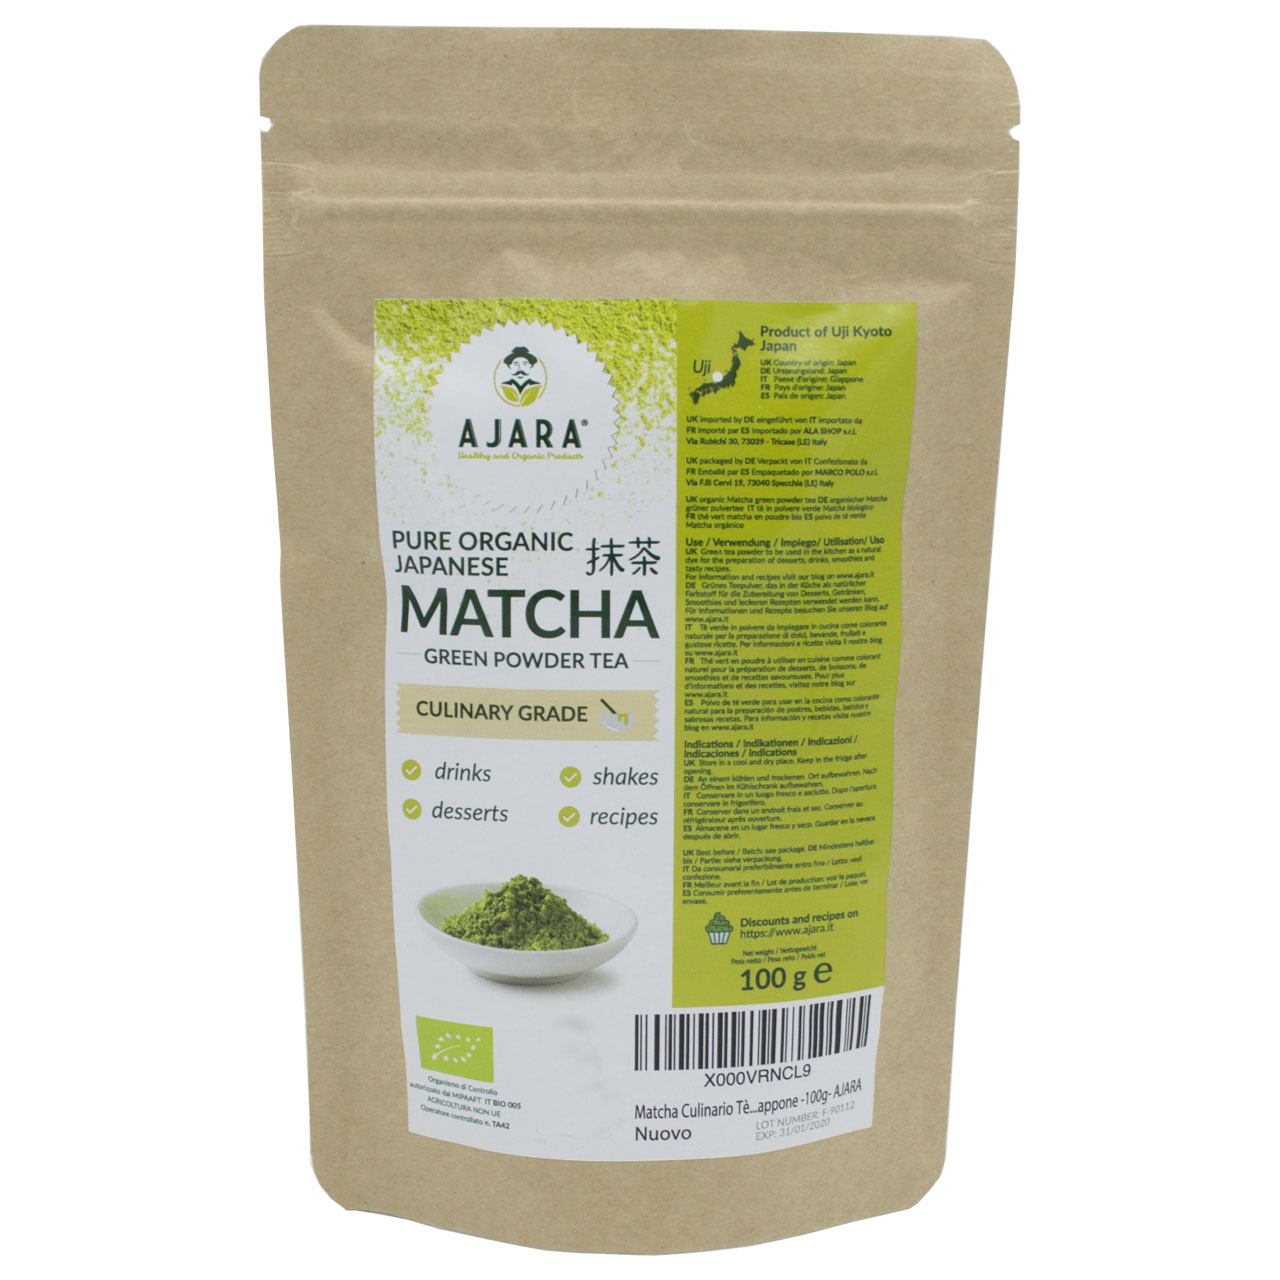 Matcha green tea culinary grade